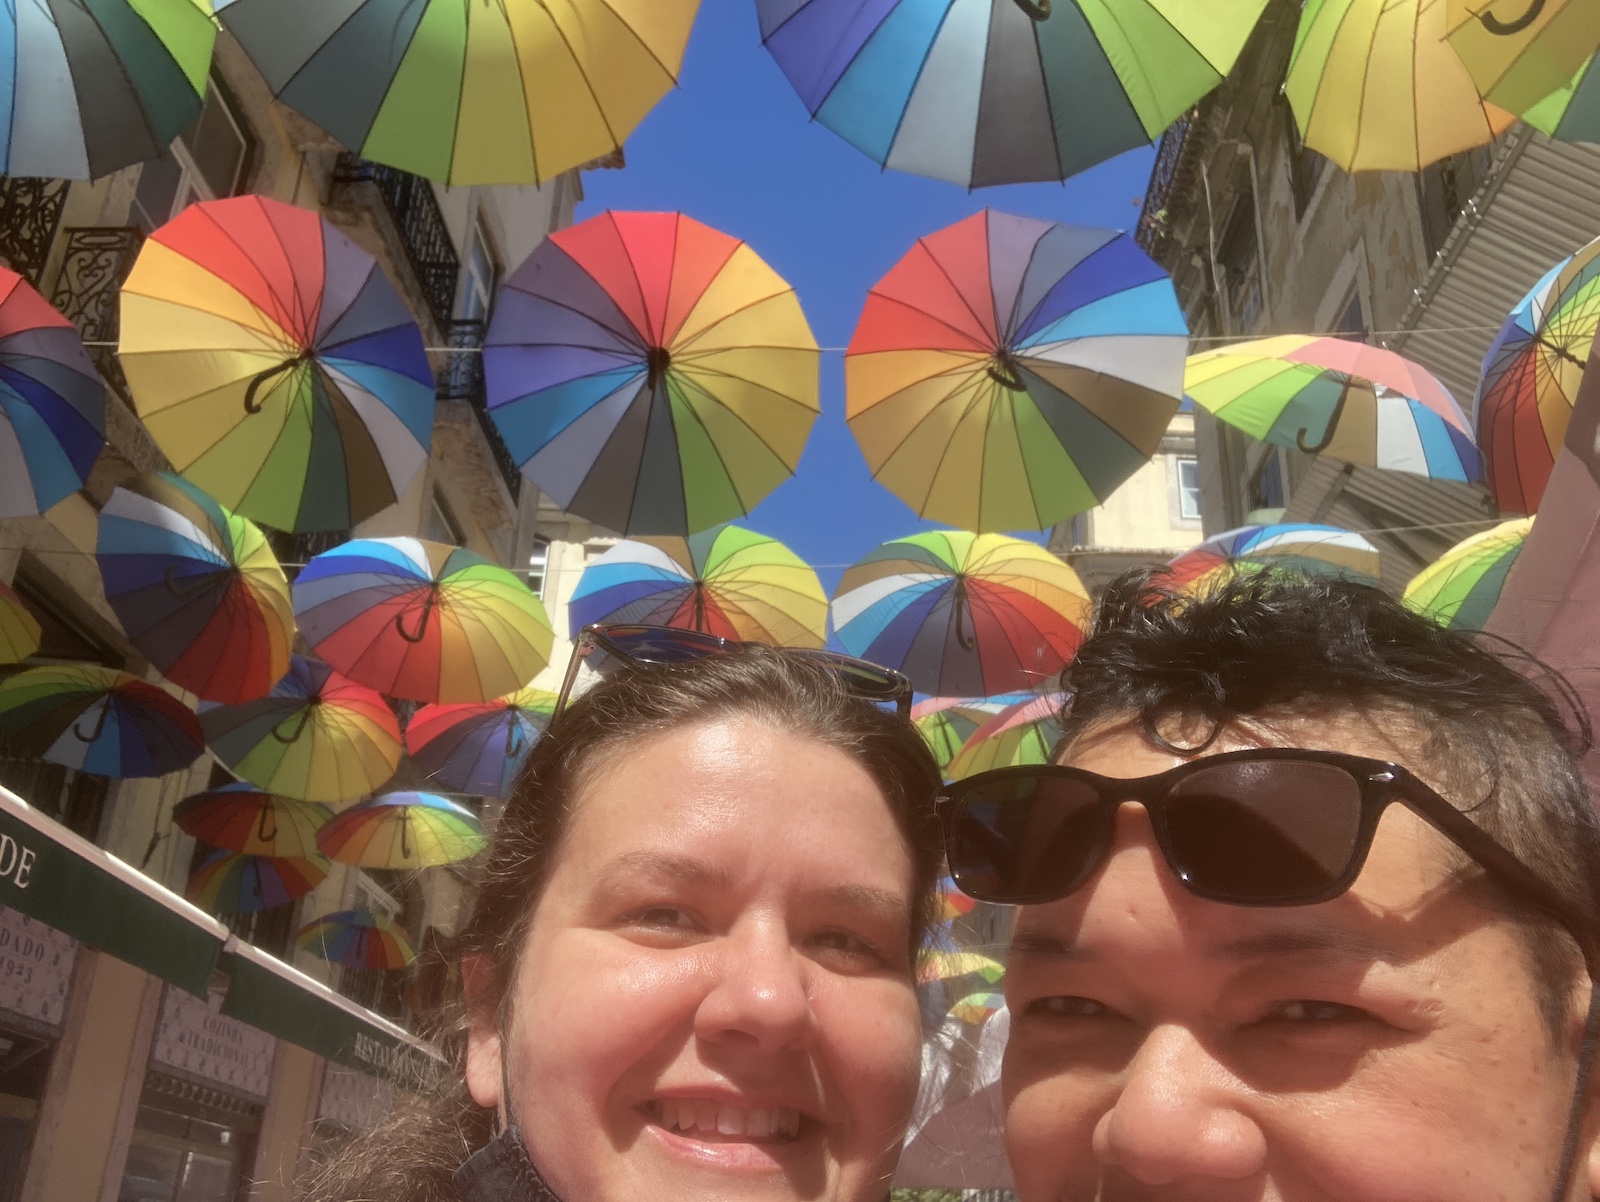 Charity and Maylene stand under rainbow umbrellas